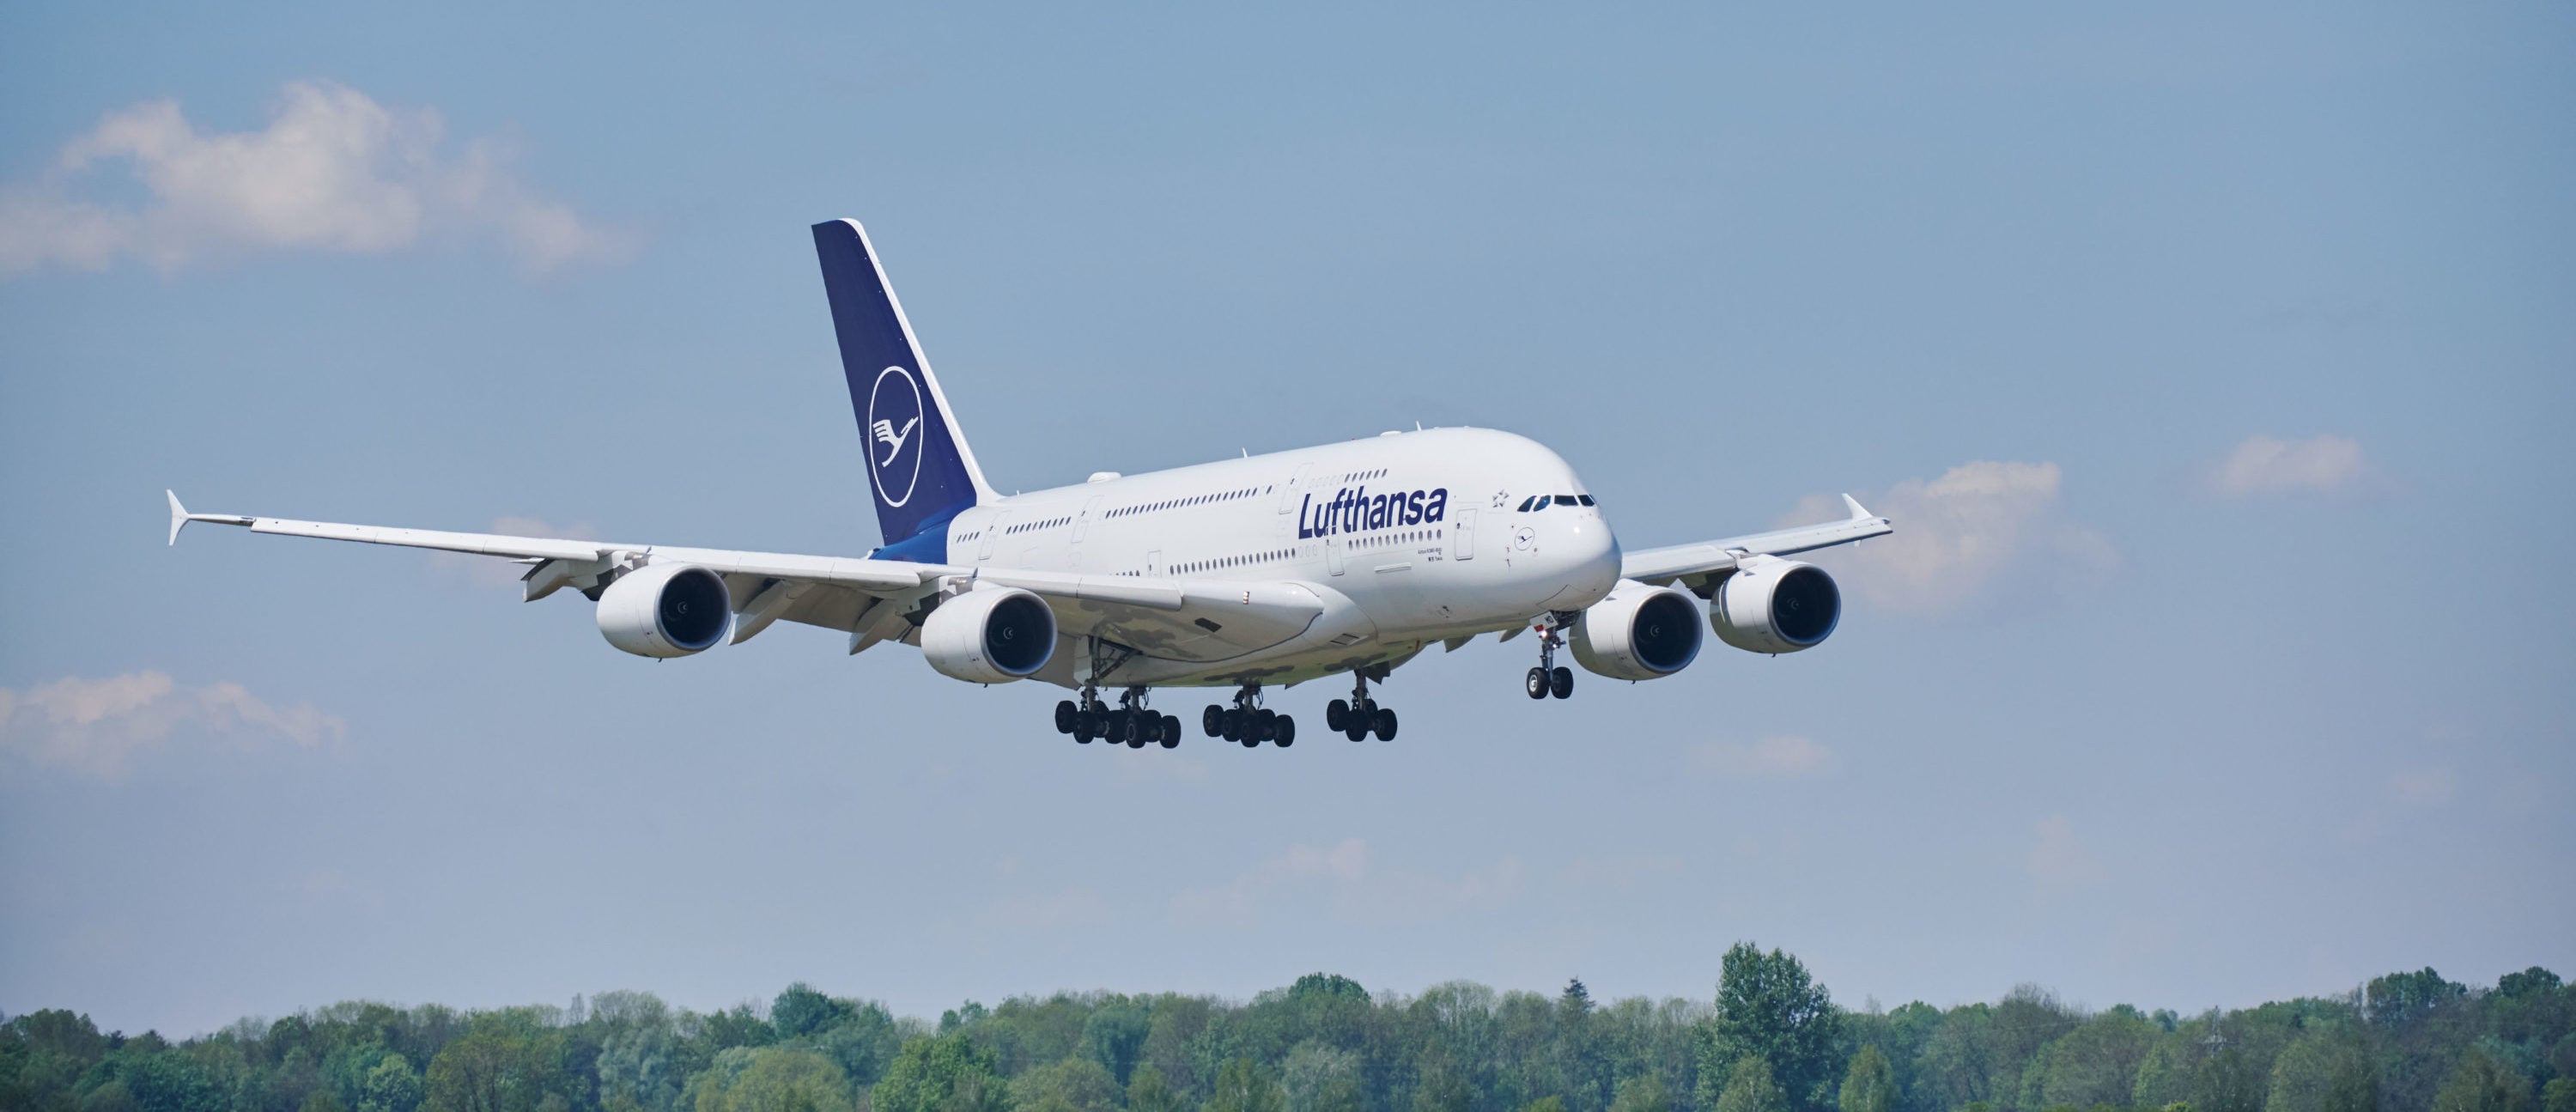 Lufthansa A380 coming into land